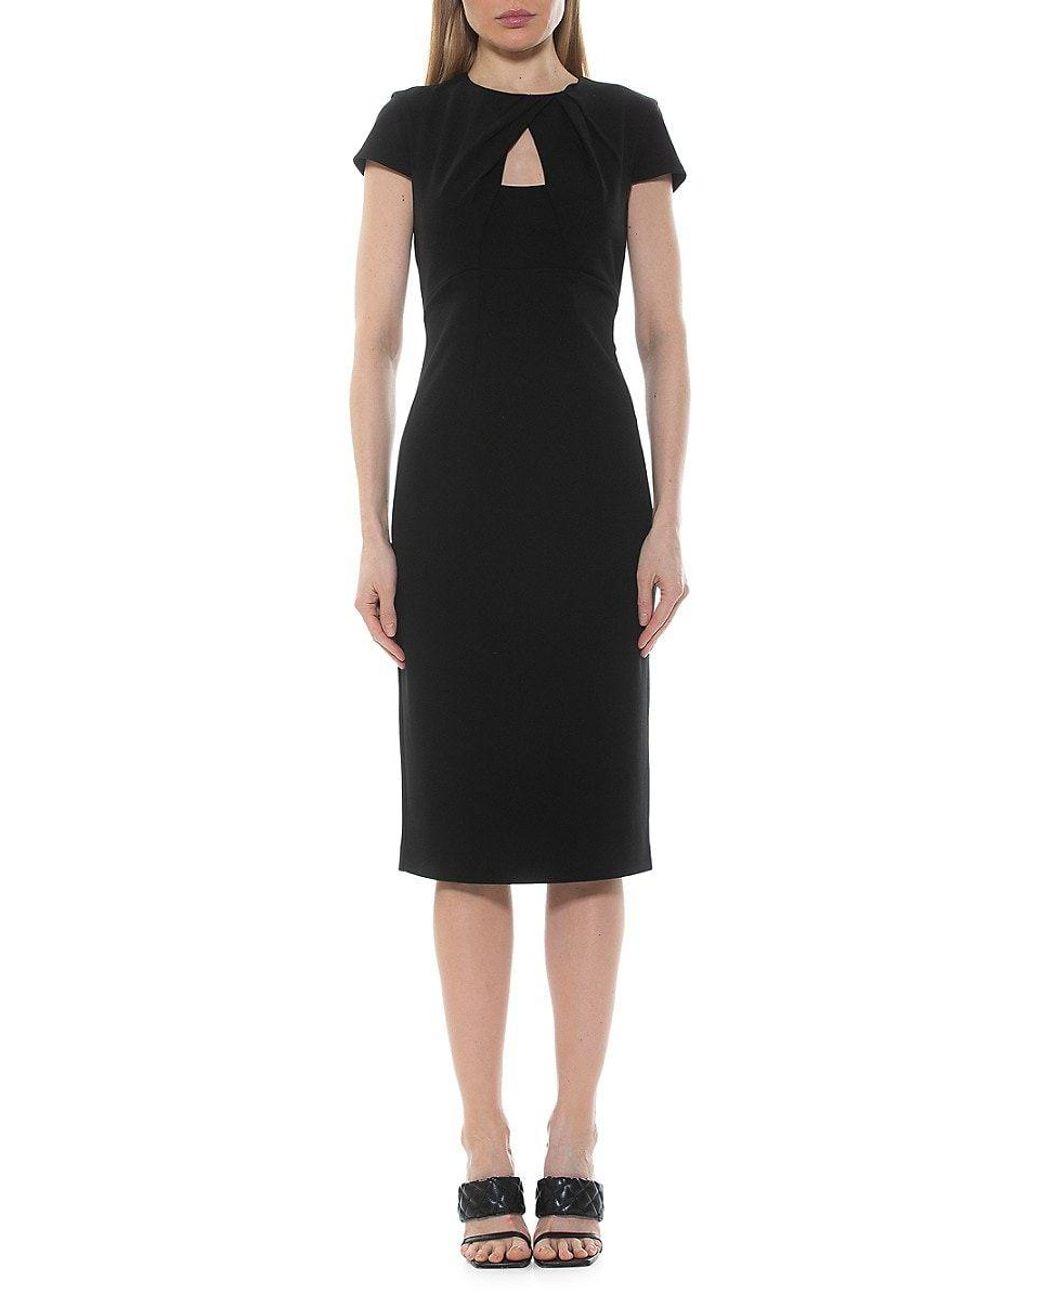 Alexia Admor Janine Keyhole Midi Sheath Dress in Black | Lyst